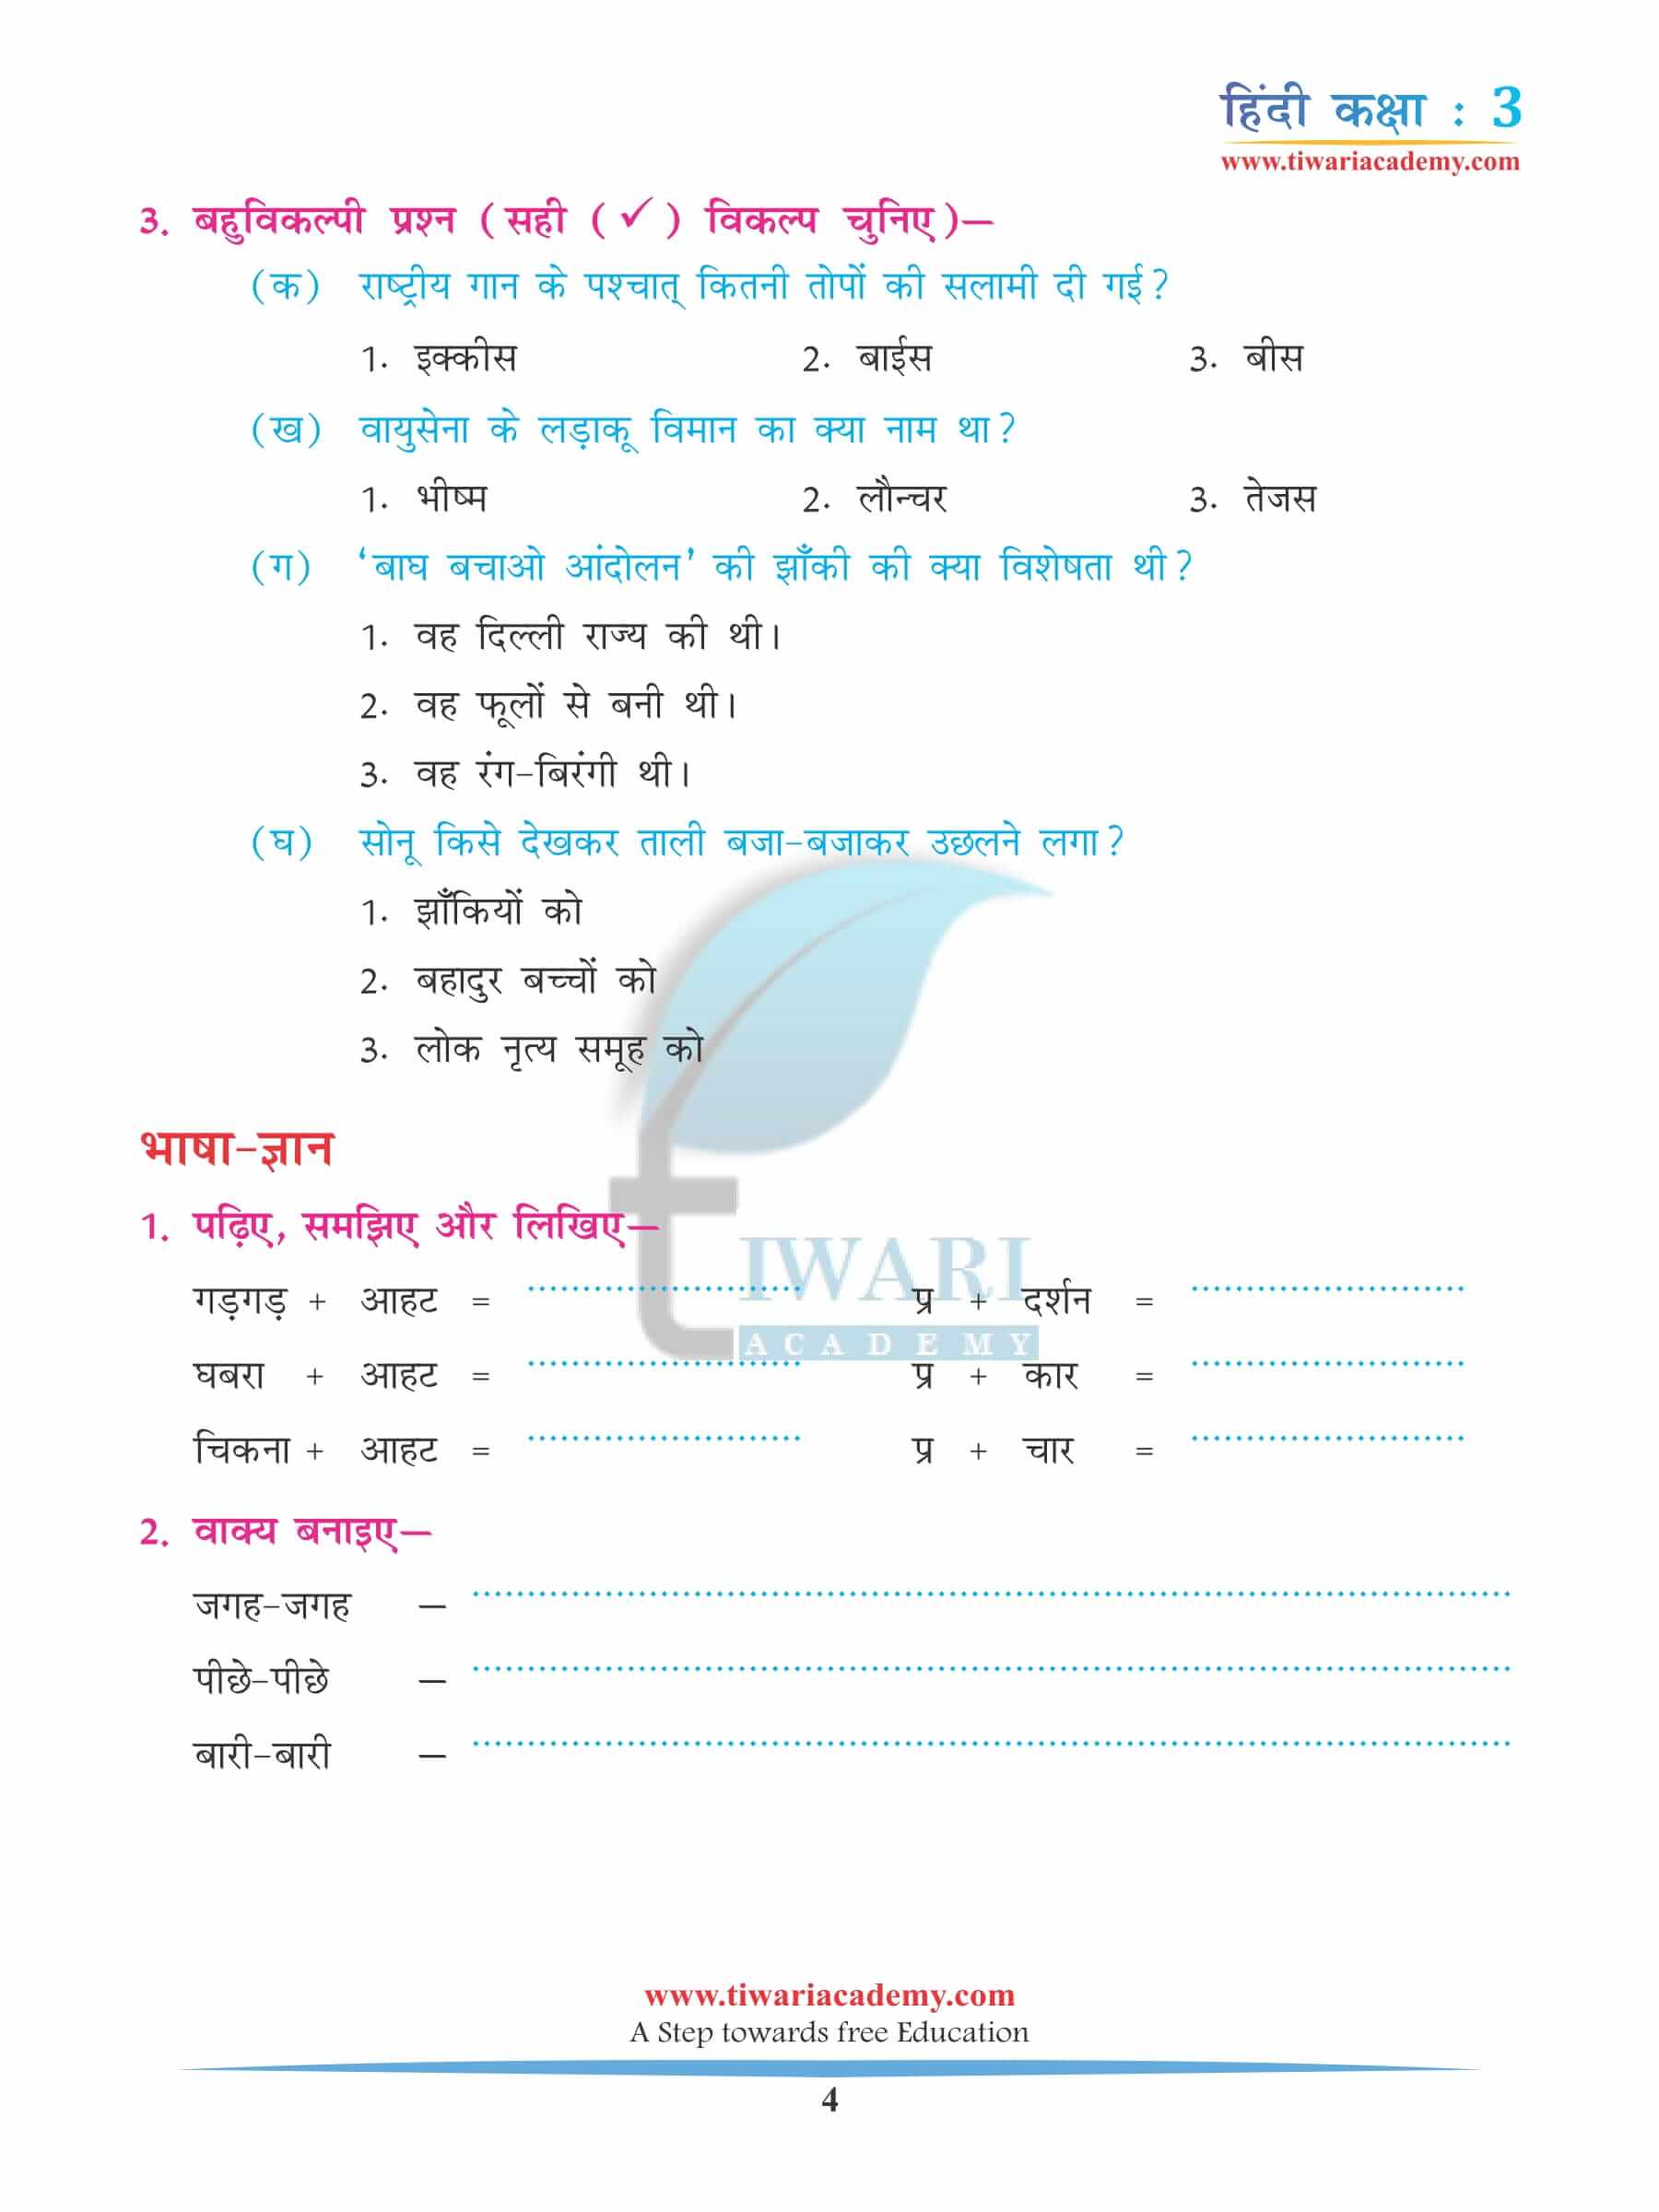 कक्षा 3 हिंदी अध्याय 8 अभ्यास प्रश्नोंत्तर